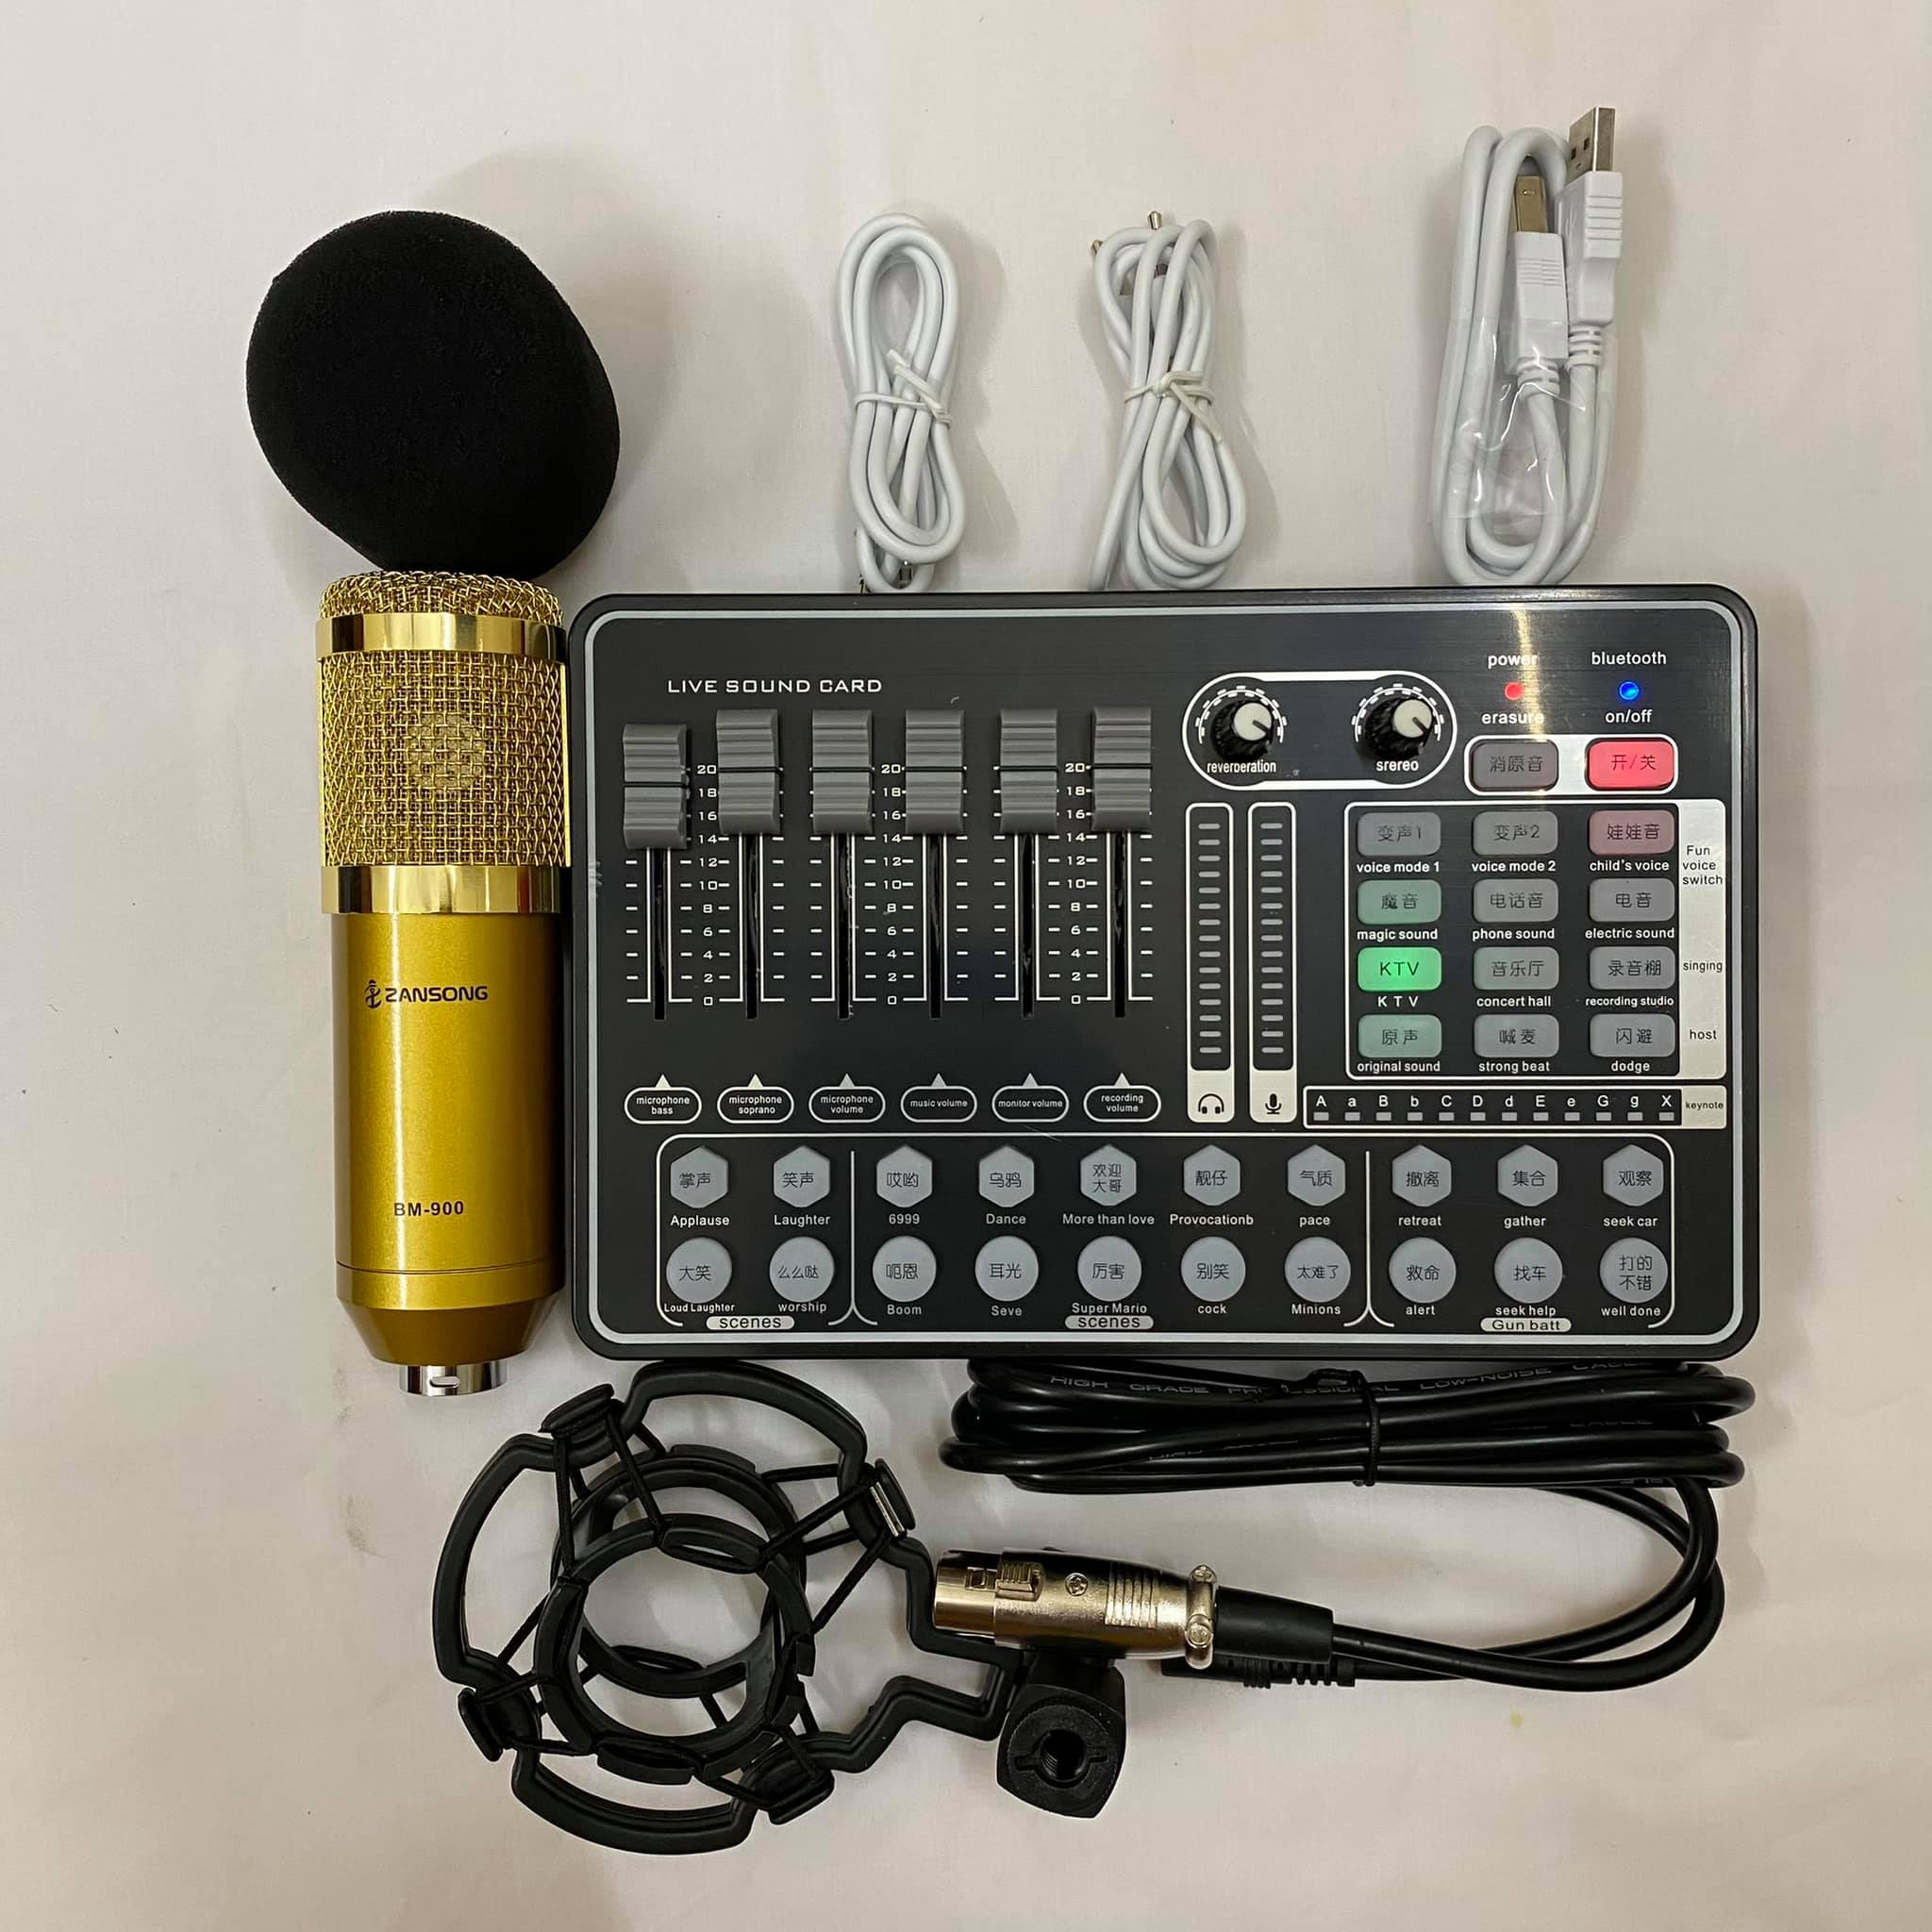 TRỌN BỘ COMBO Sound card H9 Bluetooth Auto Tune Mic Livestream Thu Âm ZANGSONG BM900